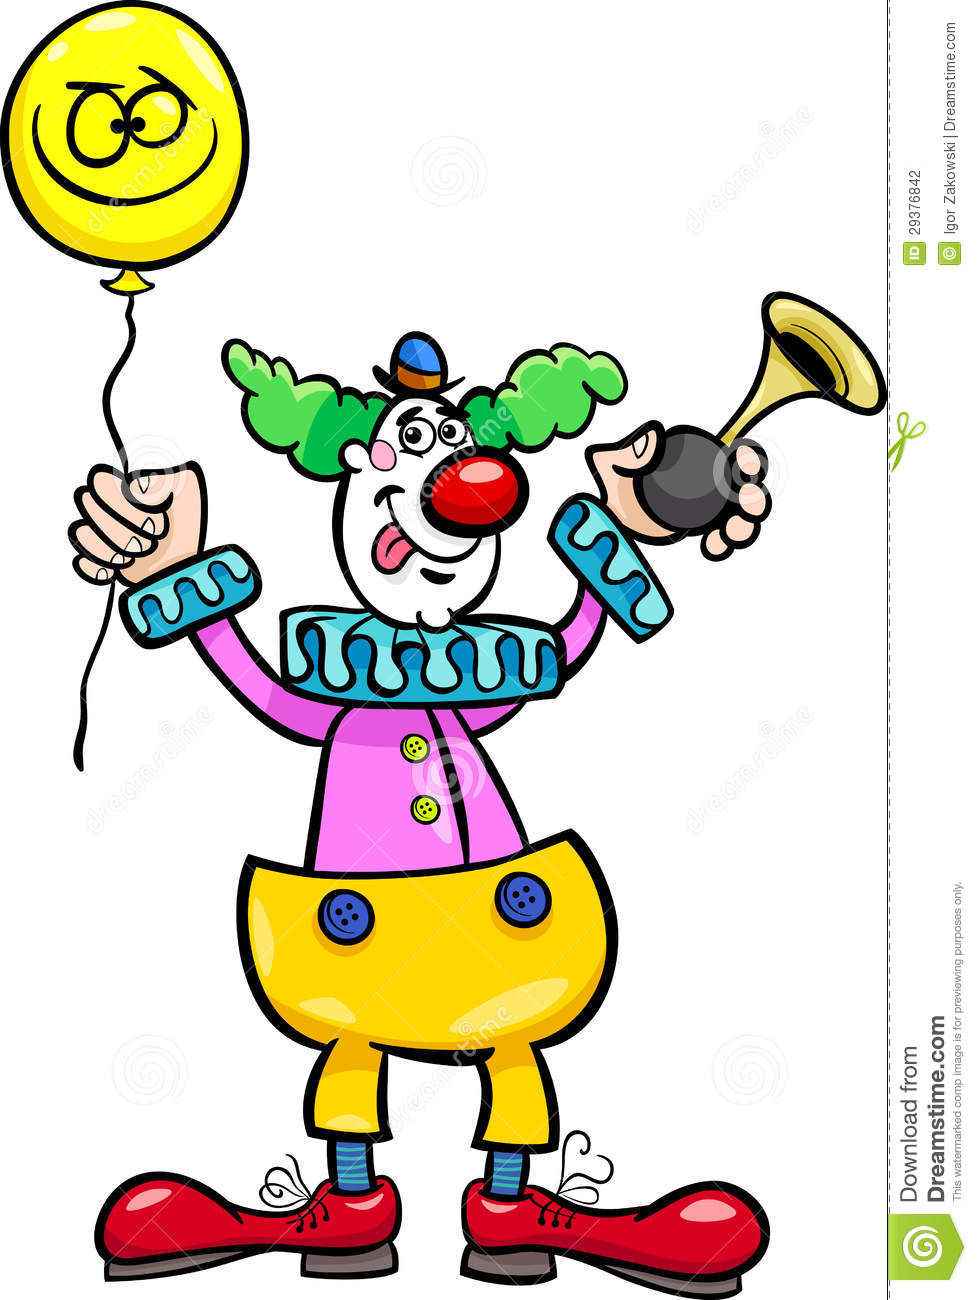 Funny Clown Cartoon Illustration Stock Photography   Image  29376842